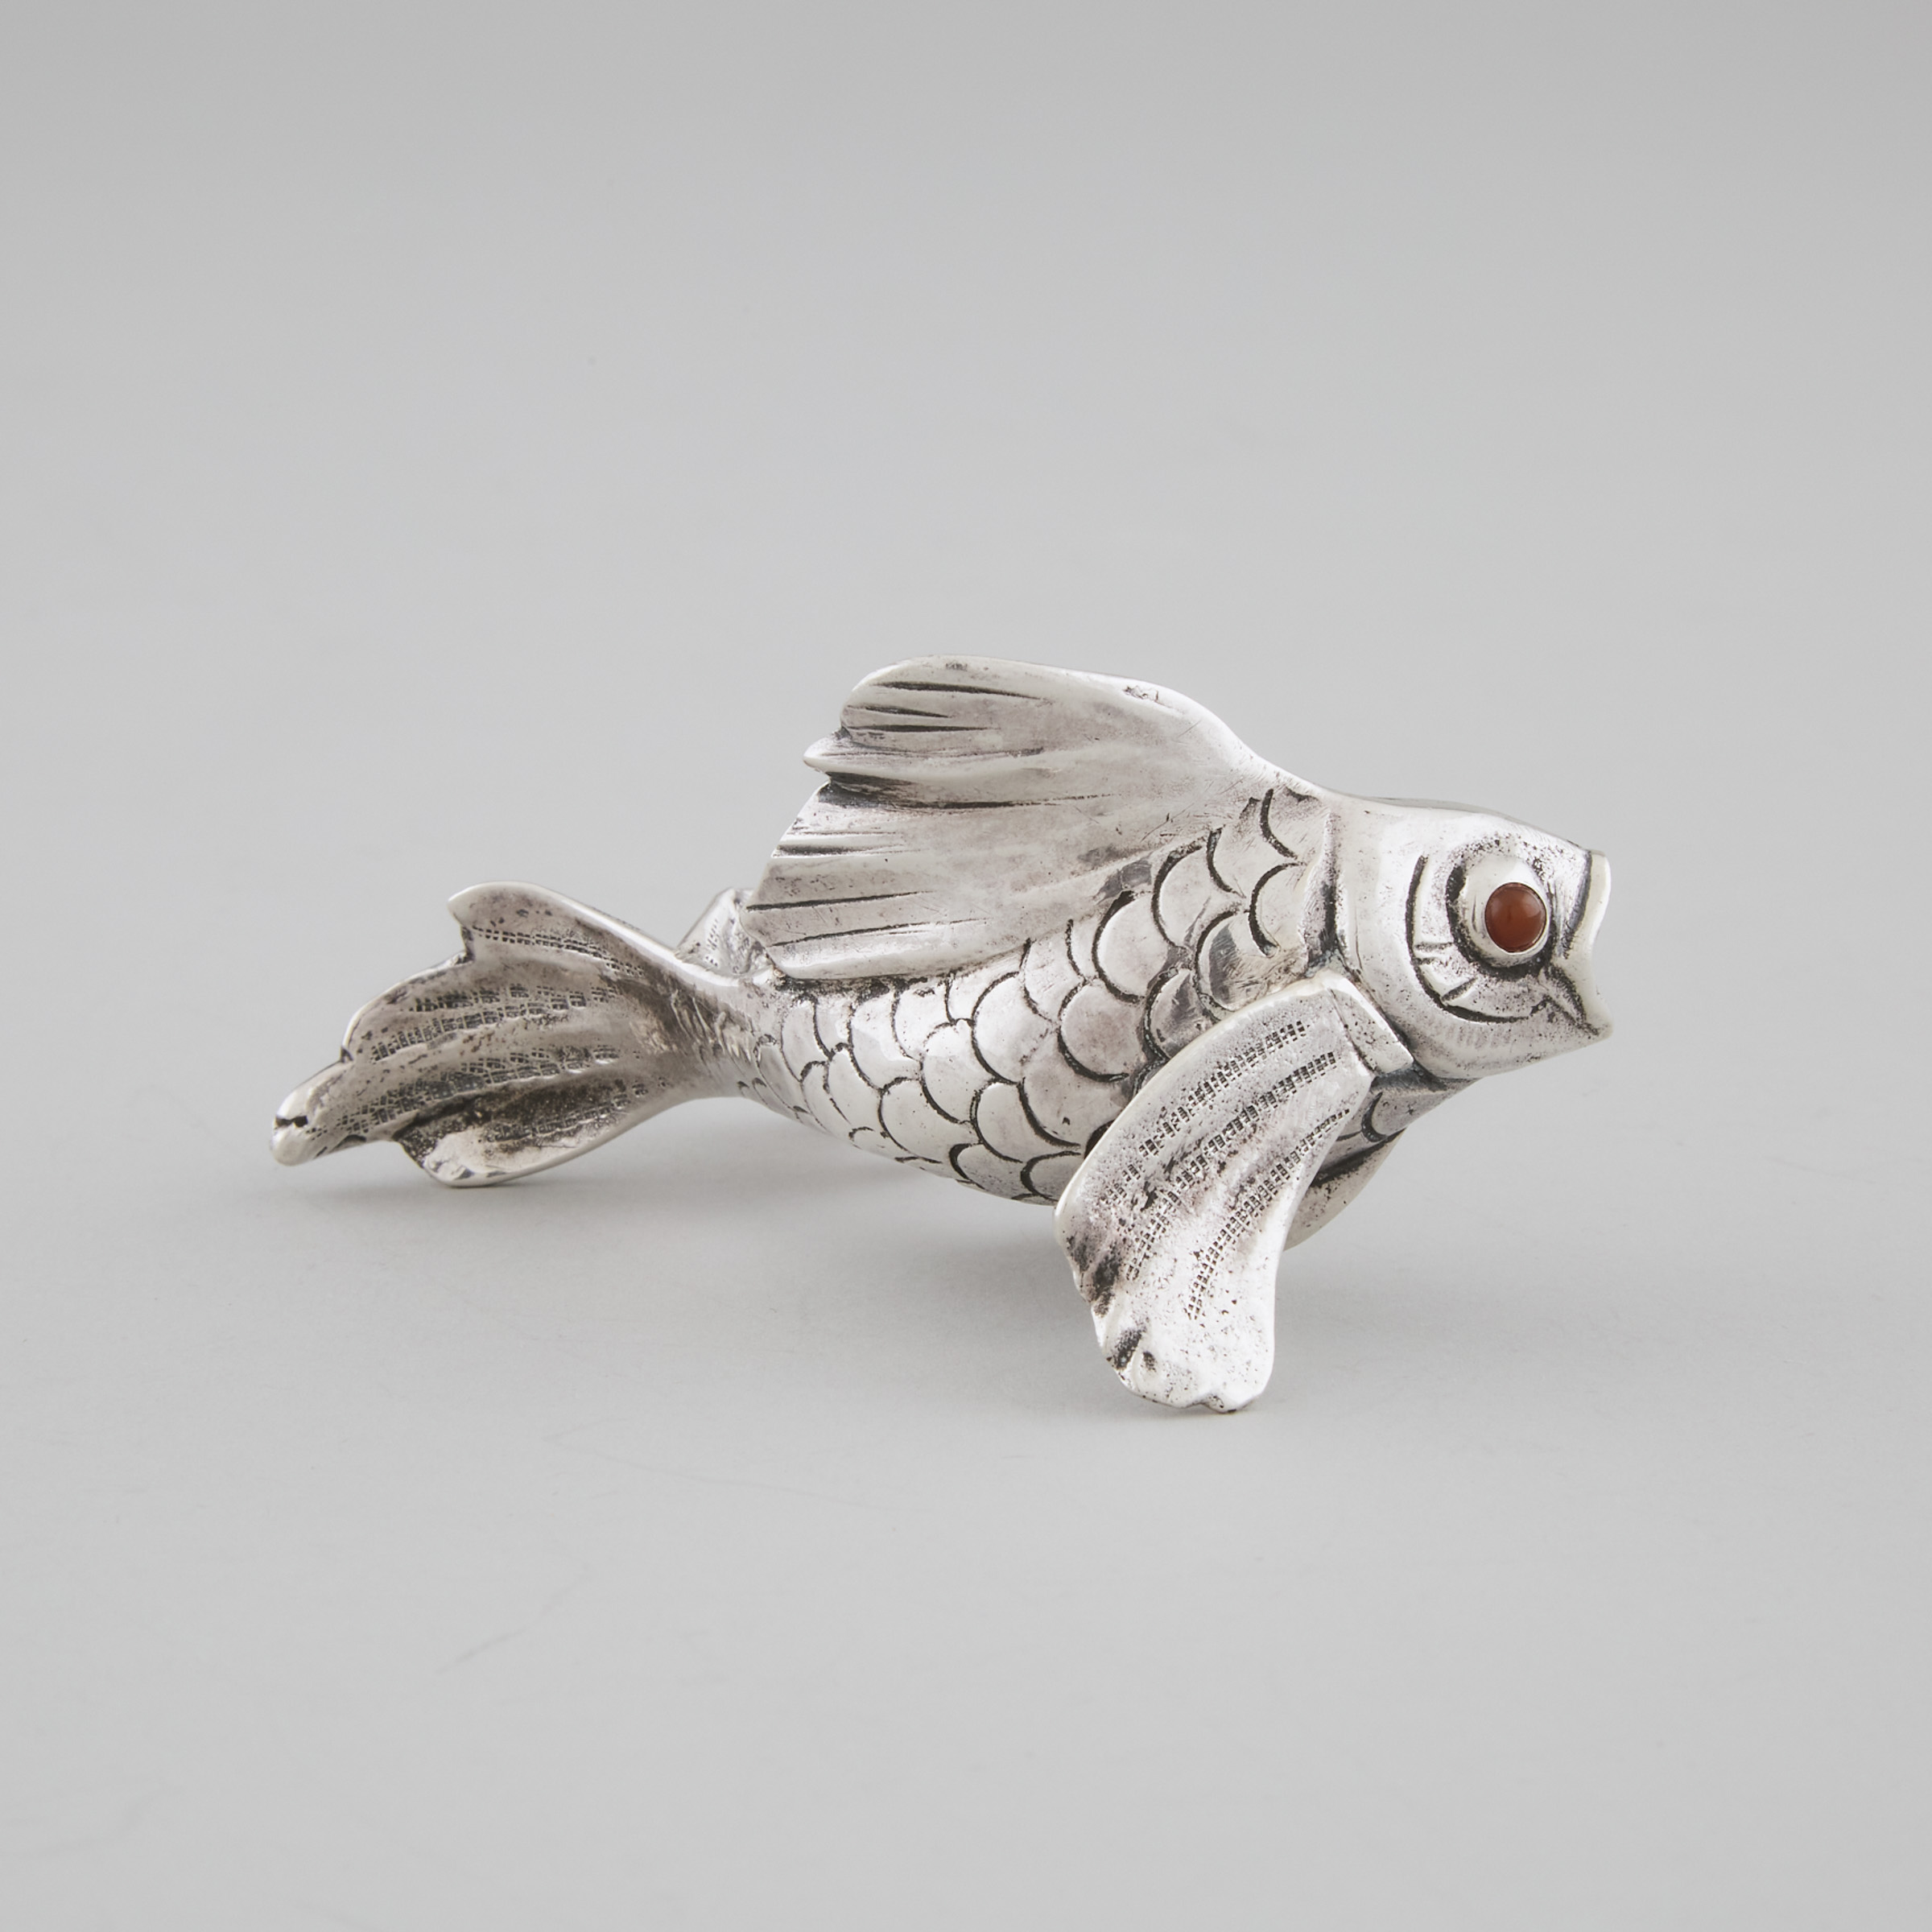 Italian Silver Model of a Fish, Buccellati, Milan, 20th century